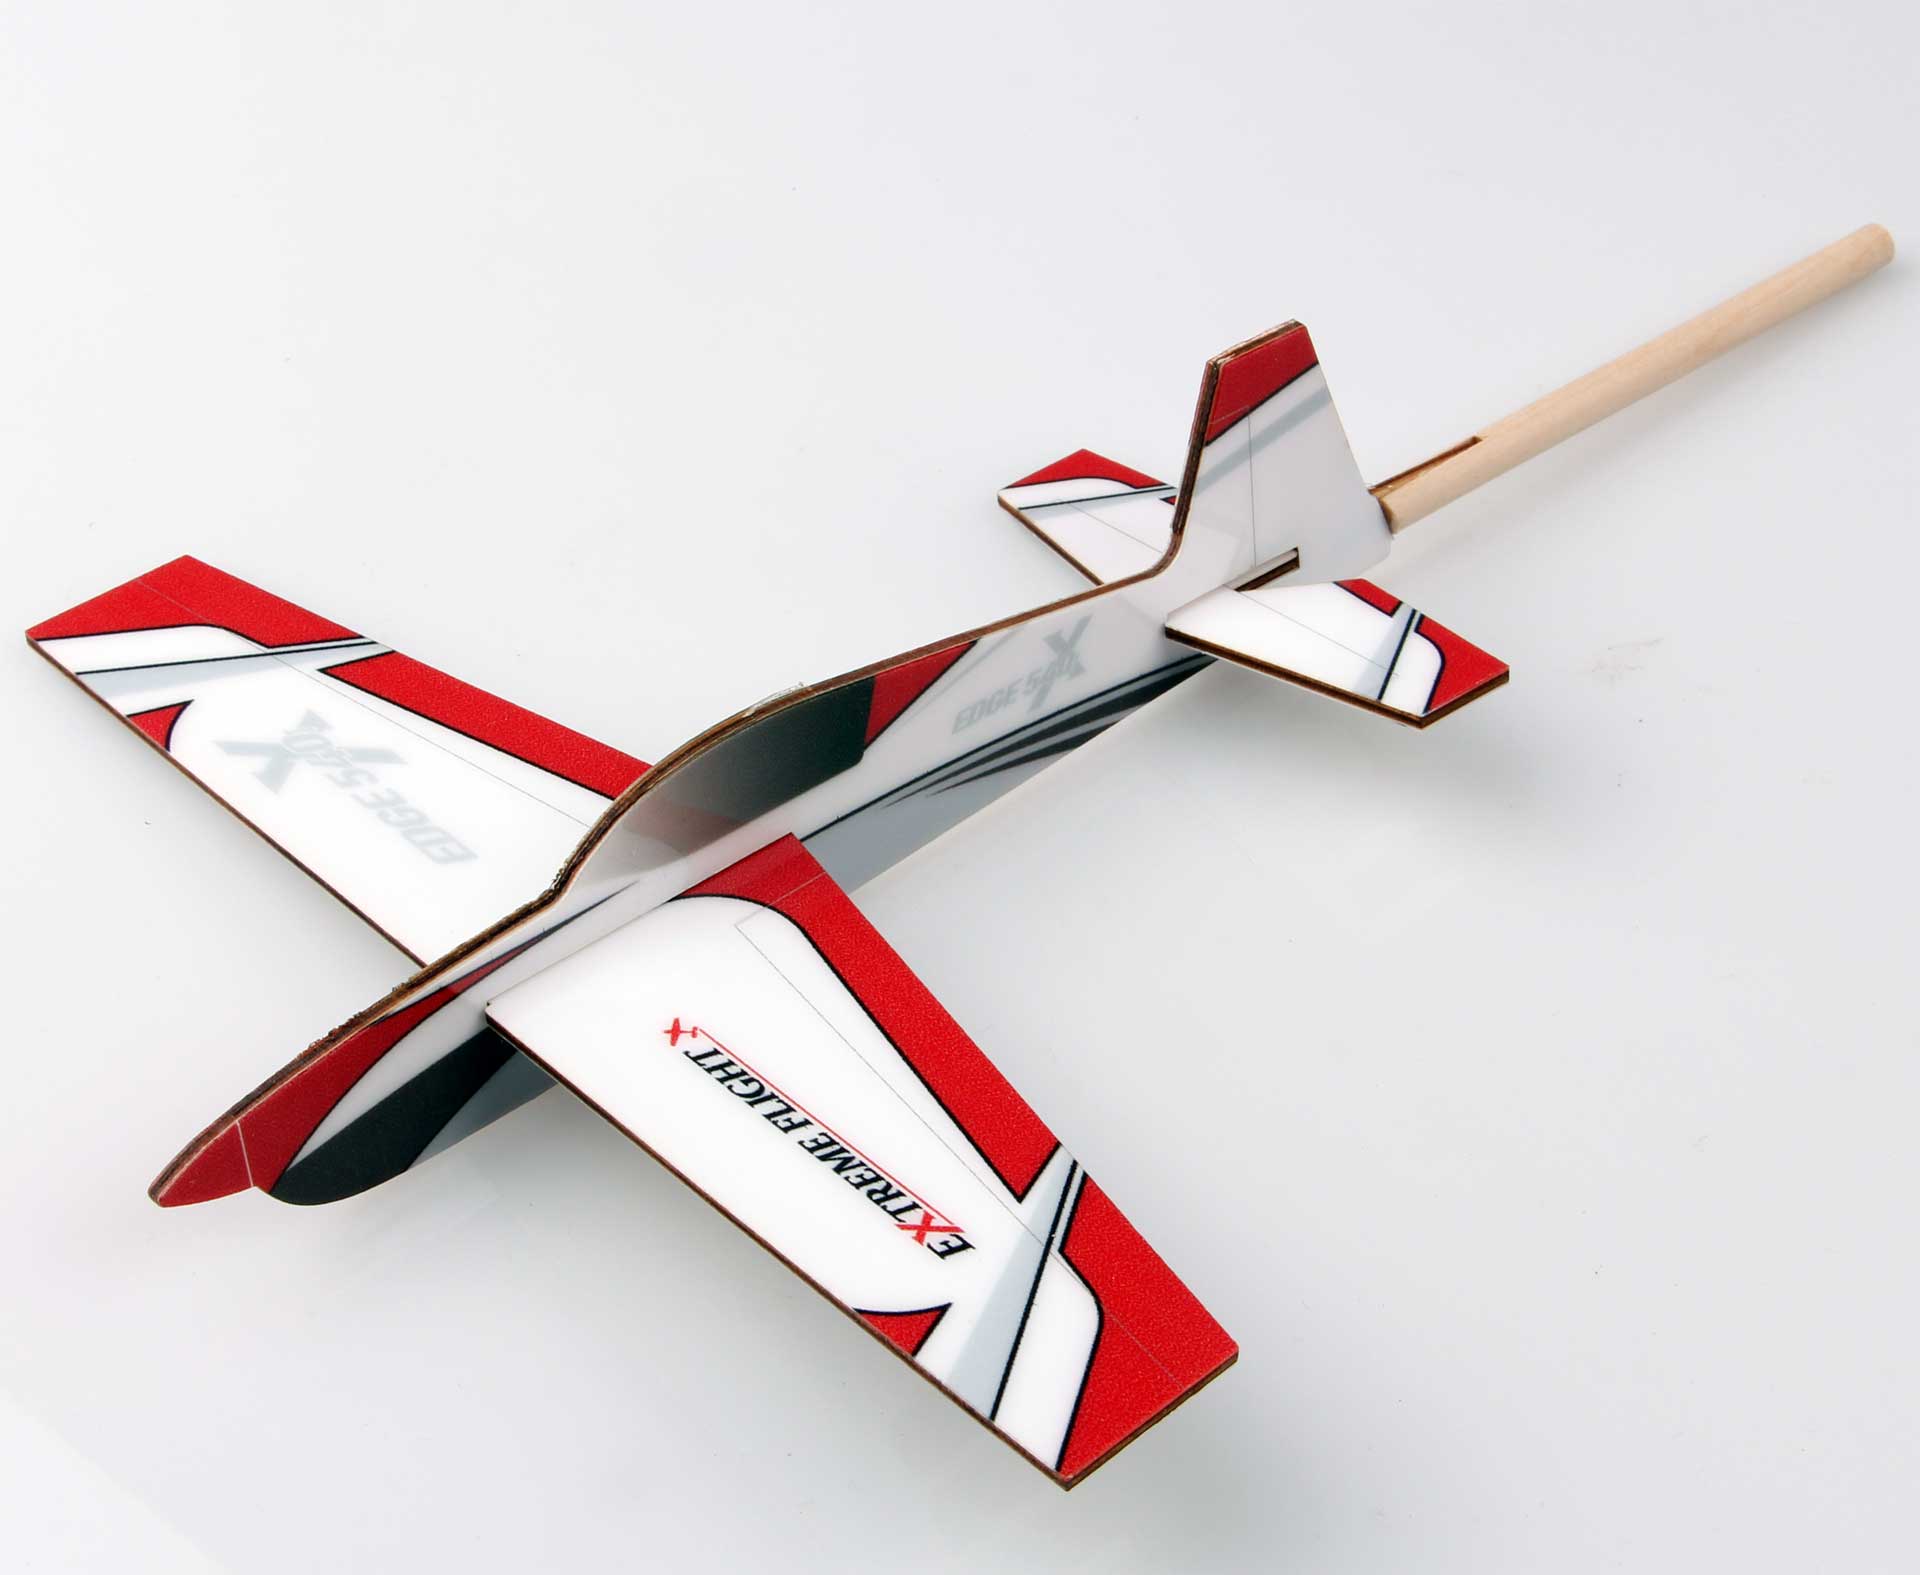 EXTREMEFLIGHT-RC Edge 540 red/white Stick Plane